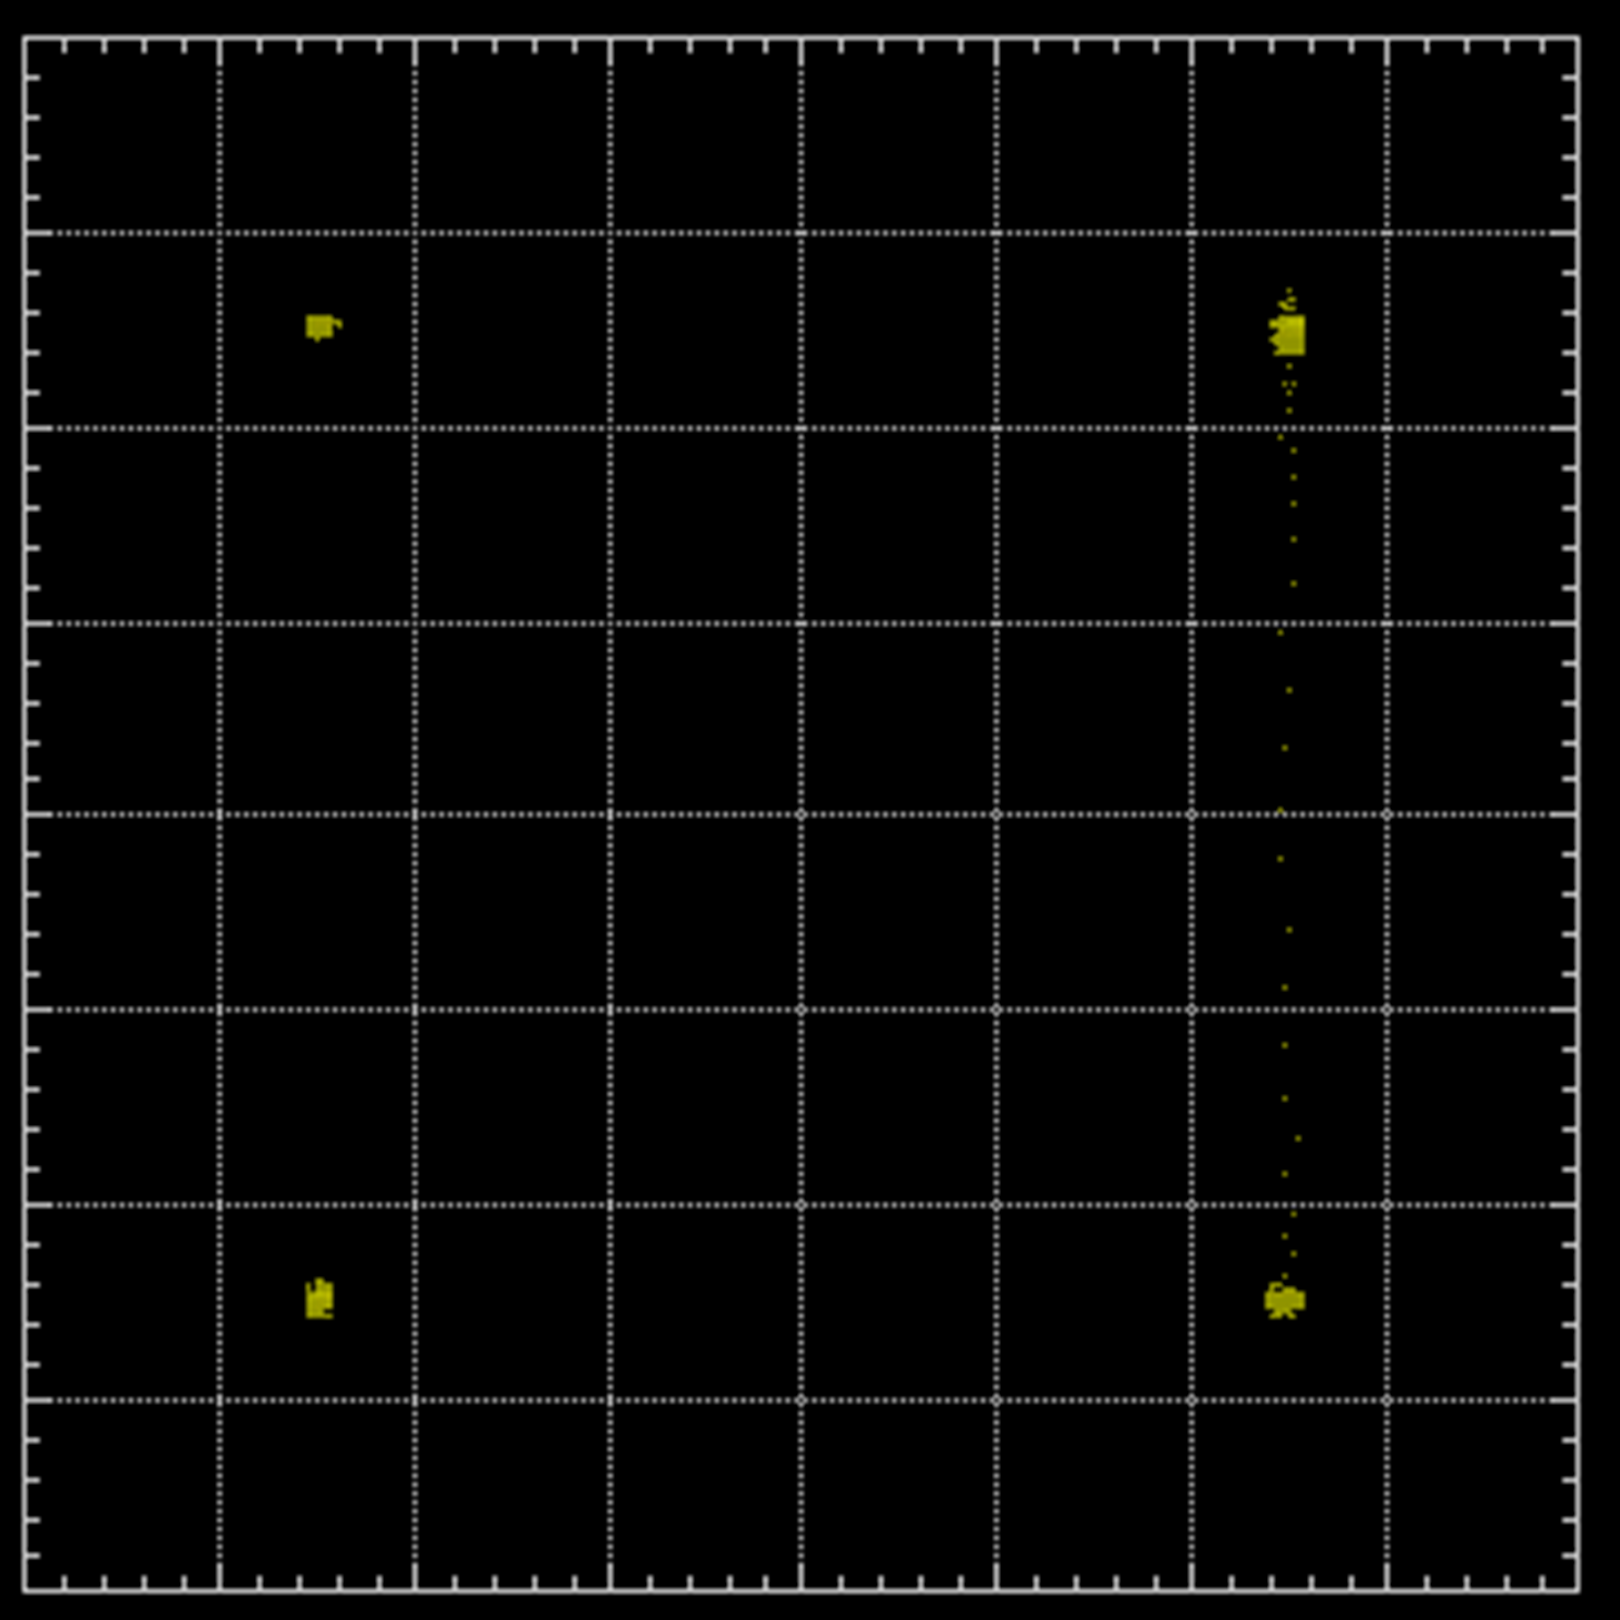 C. Oscilloscope presentation of quadrature signals (left analog, right digital)